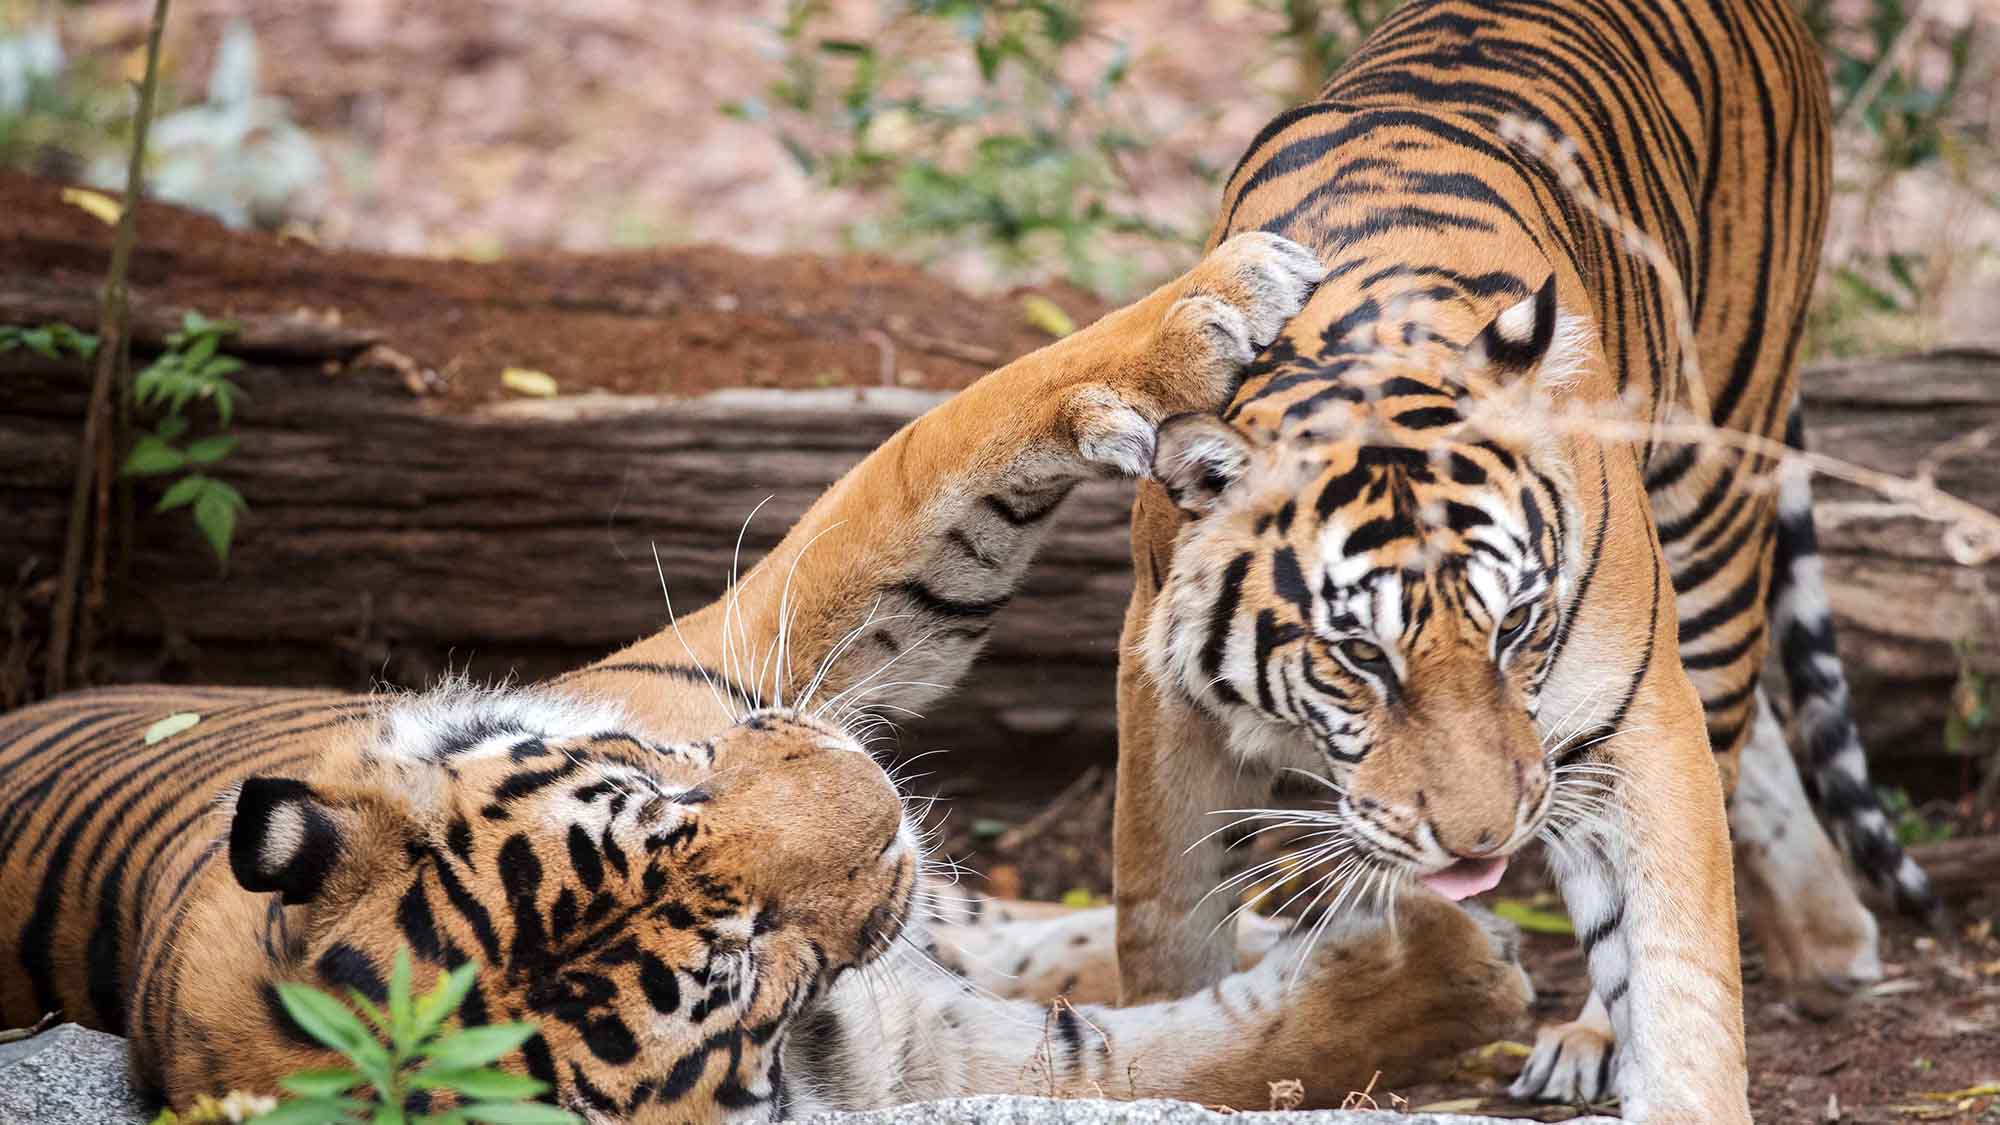 Adorable Clip Shows Critically Endangered Newborn Sumatran Tiger Cubs Cuddling Up With Mum